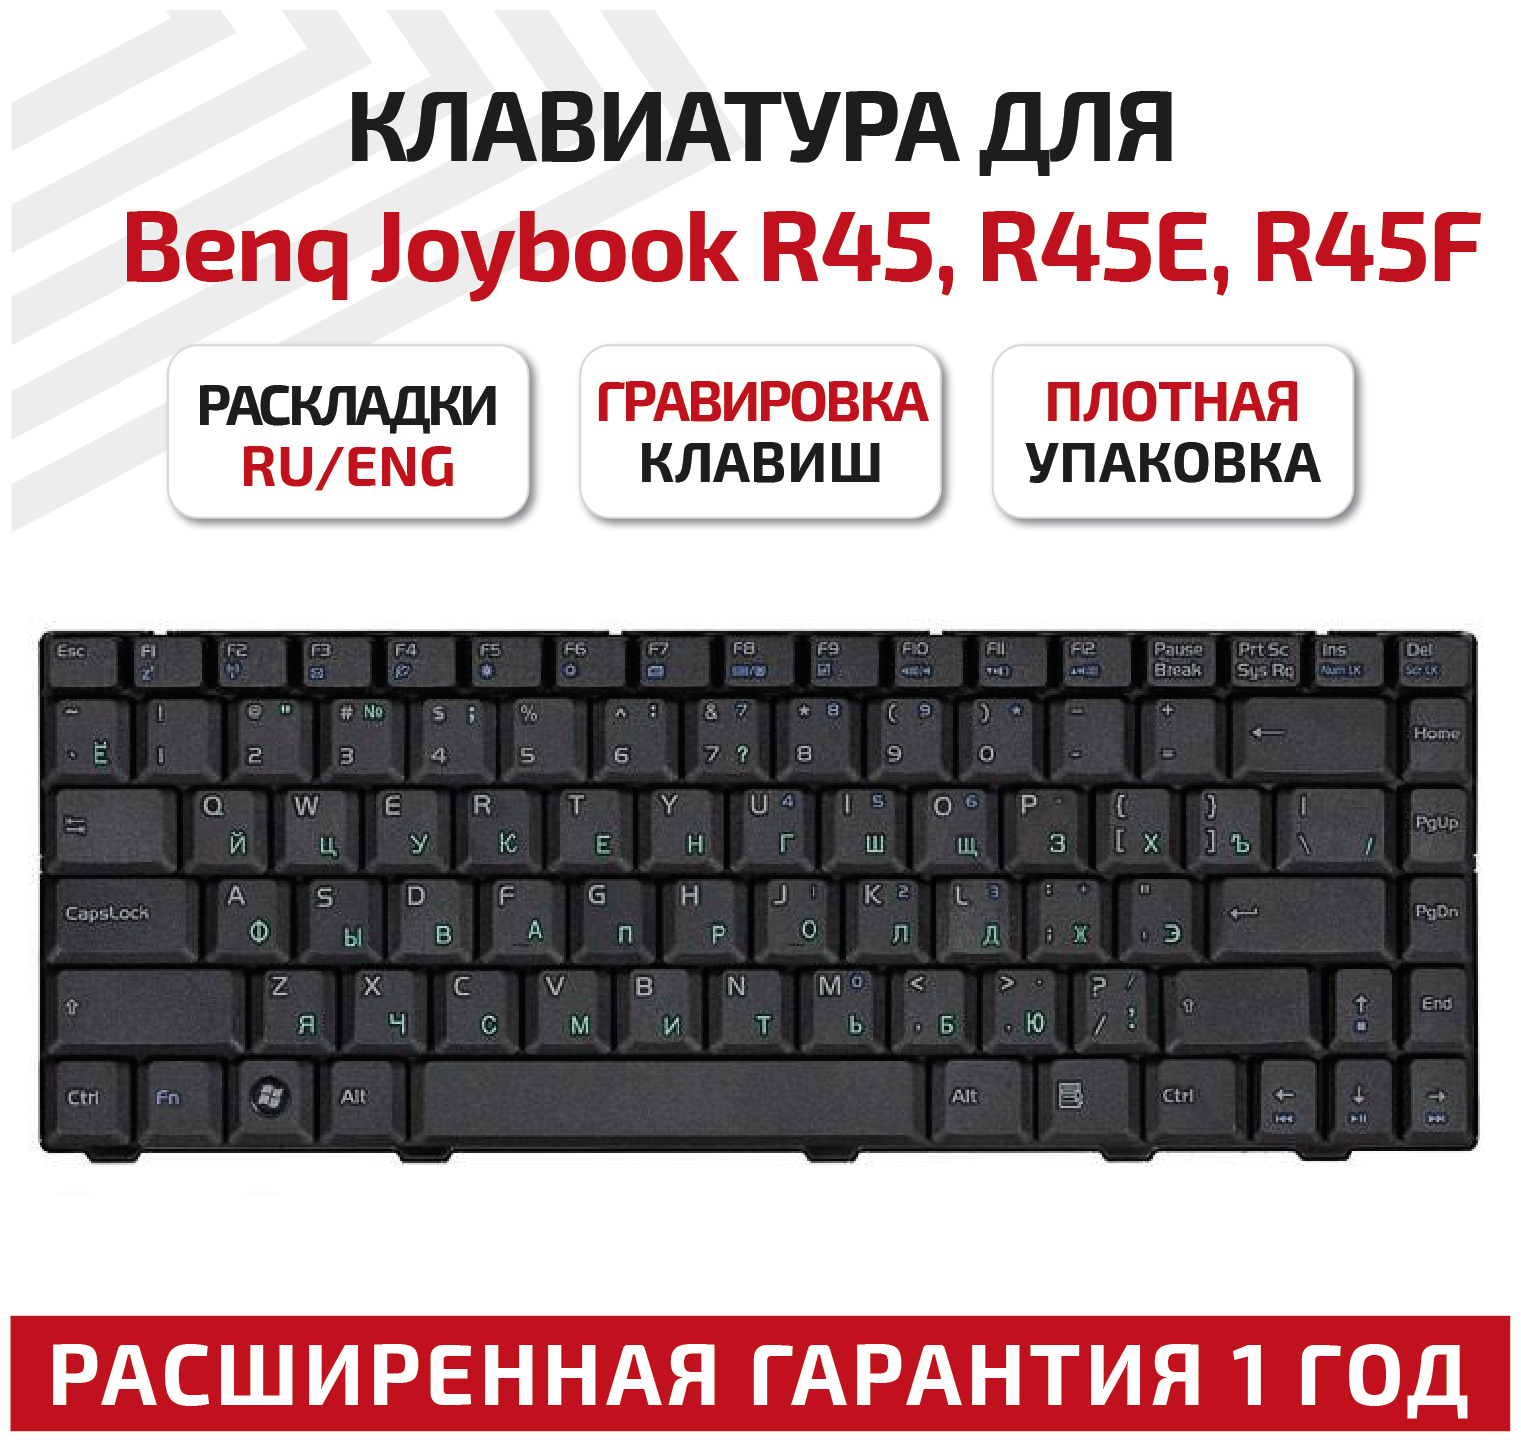 Клавиатура (keyboard) 04GNH41KRU00 для ноутбука BenQ JoyBook R45, R45E, R45F, R45EG, R46, R47, черная